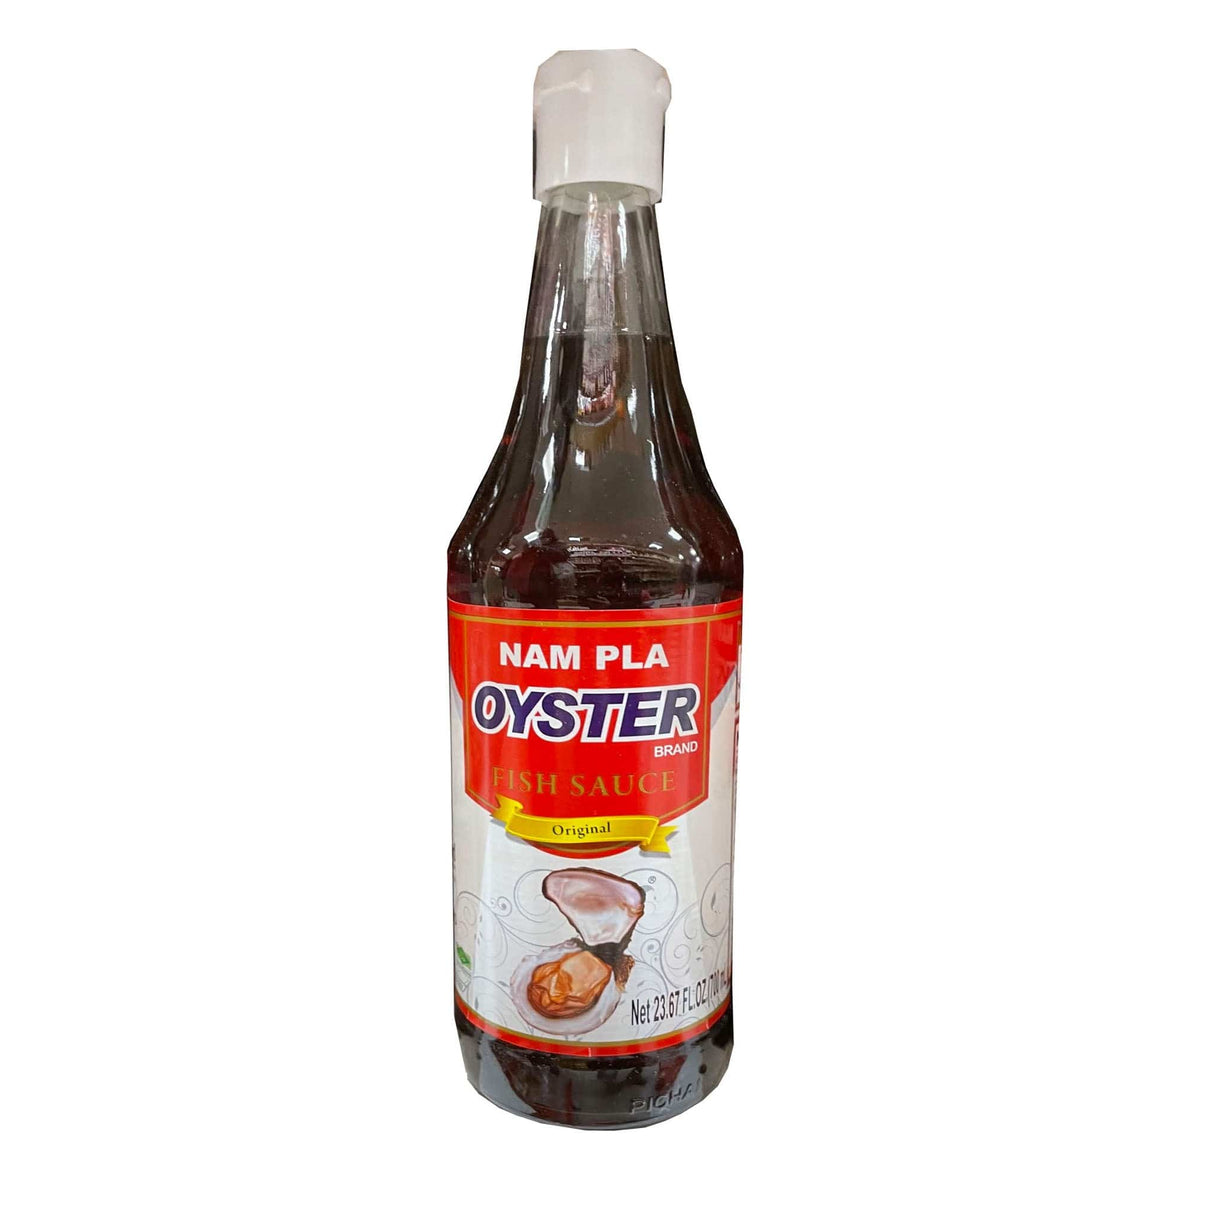 Oyster Brand Fish Sauce (Original)